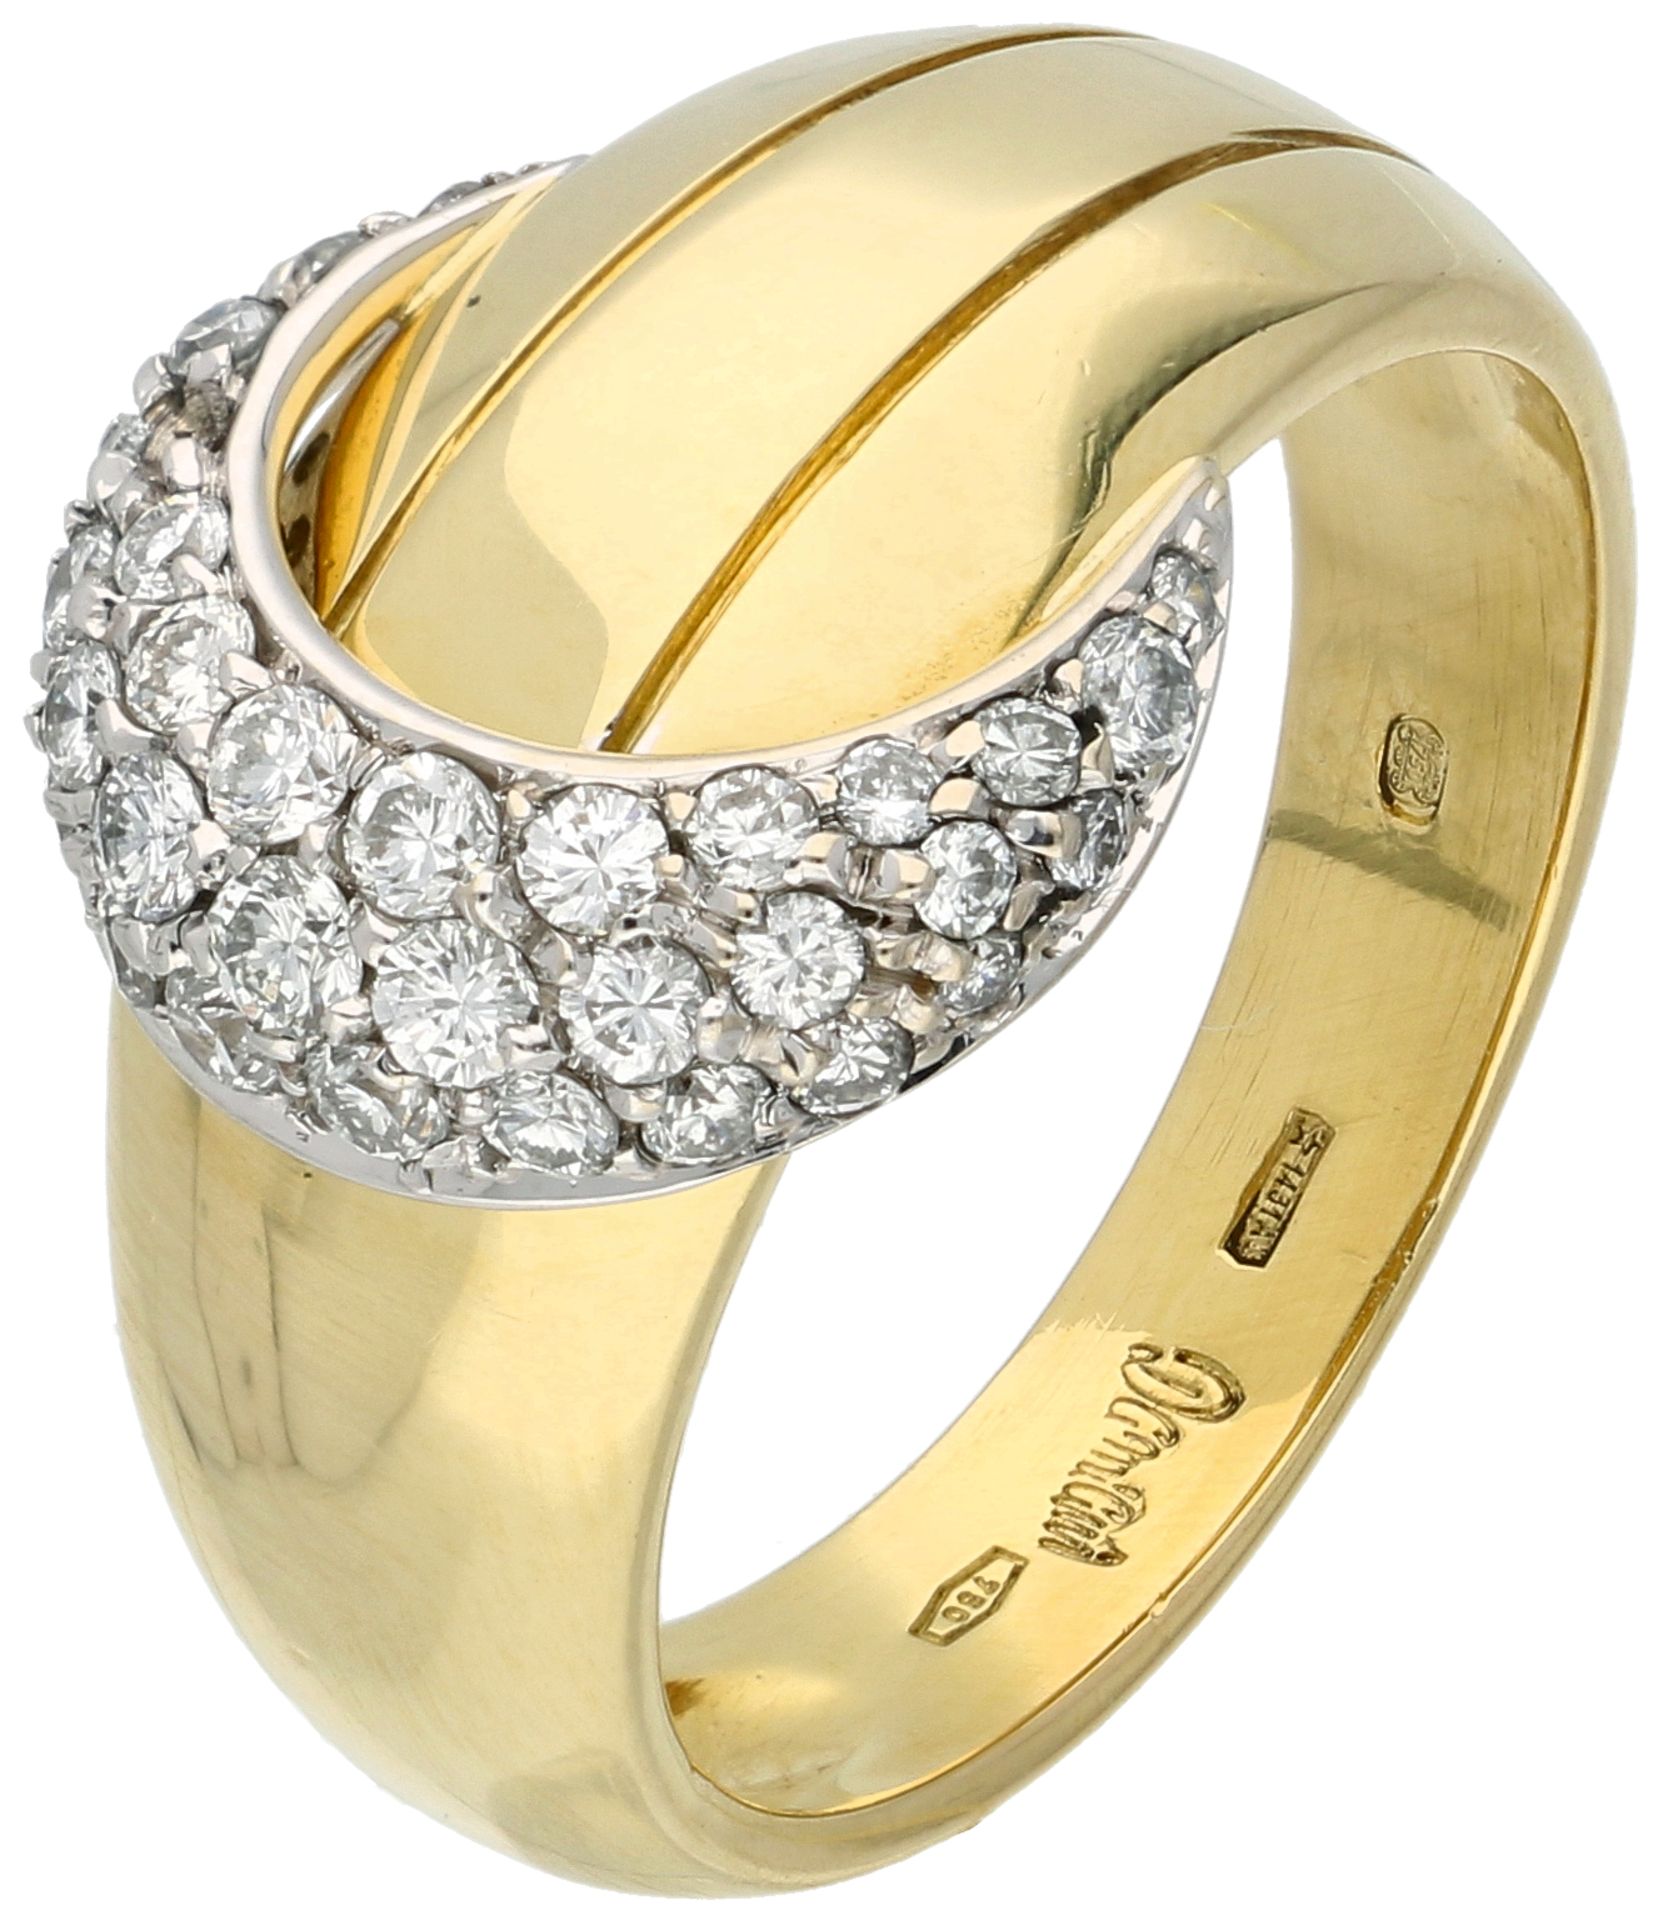 Damiani 18K yellow gold half moon ring set with approx. 0.46 ct diamond.